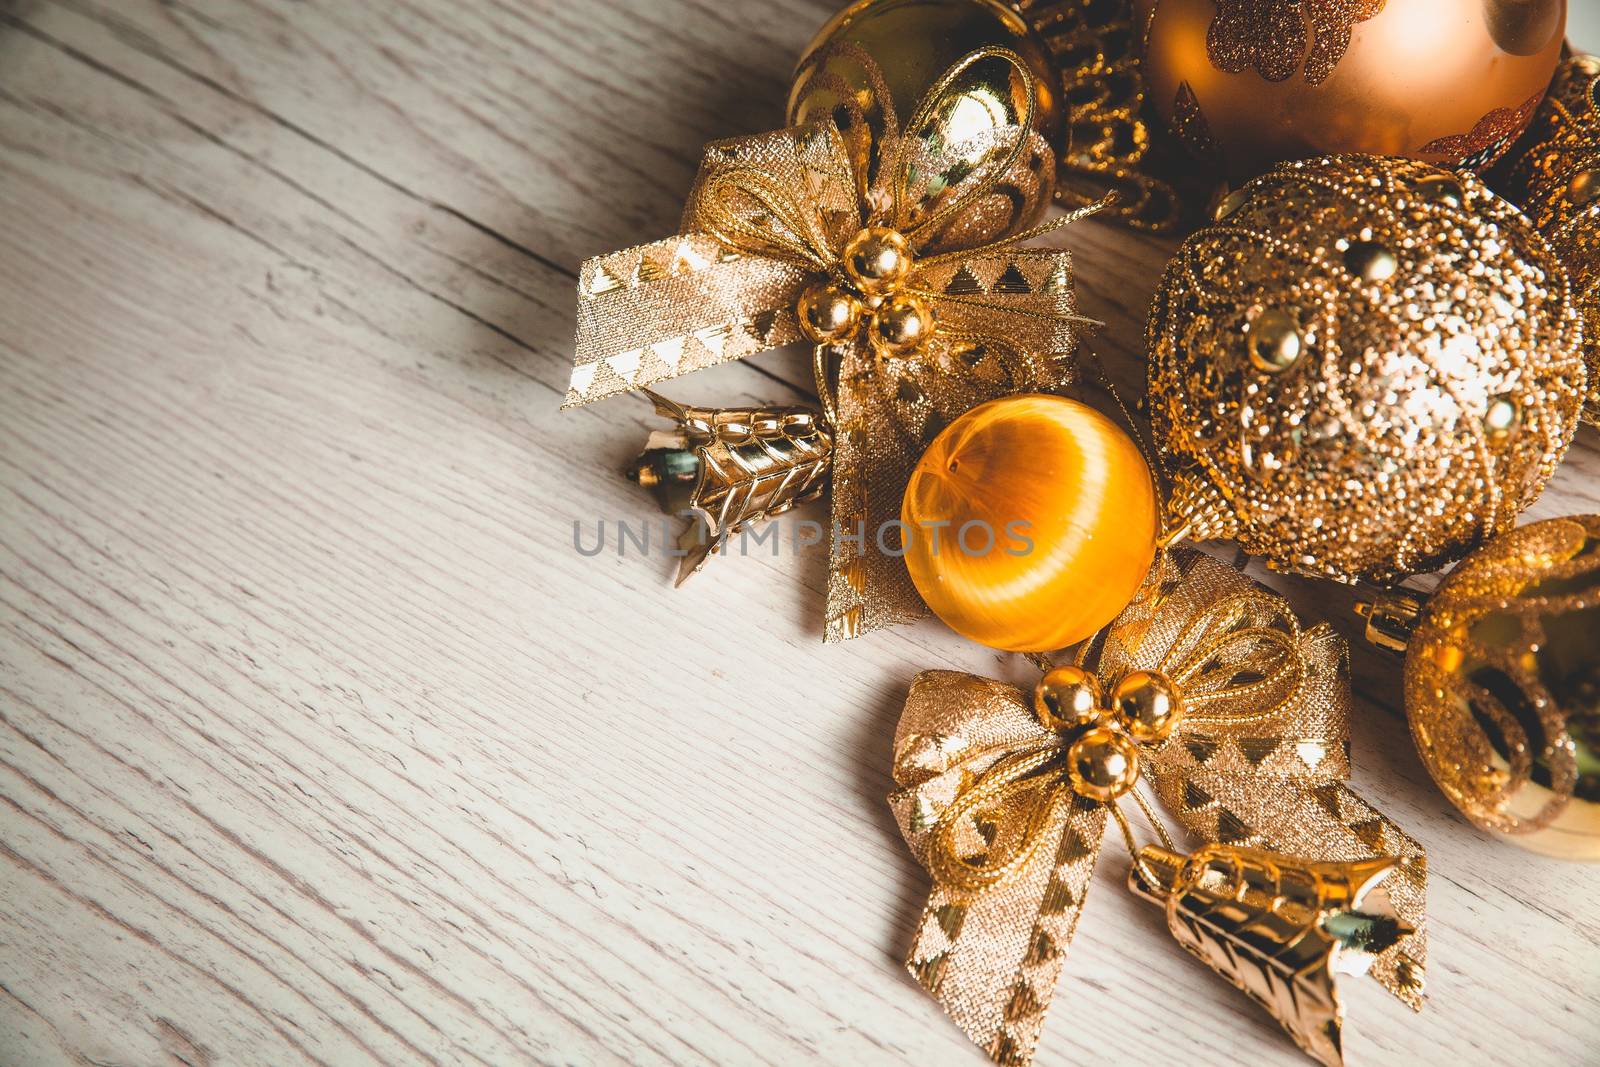 Christmas 2019 decor, balls and bows by mi_viri